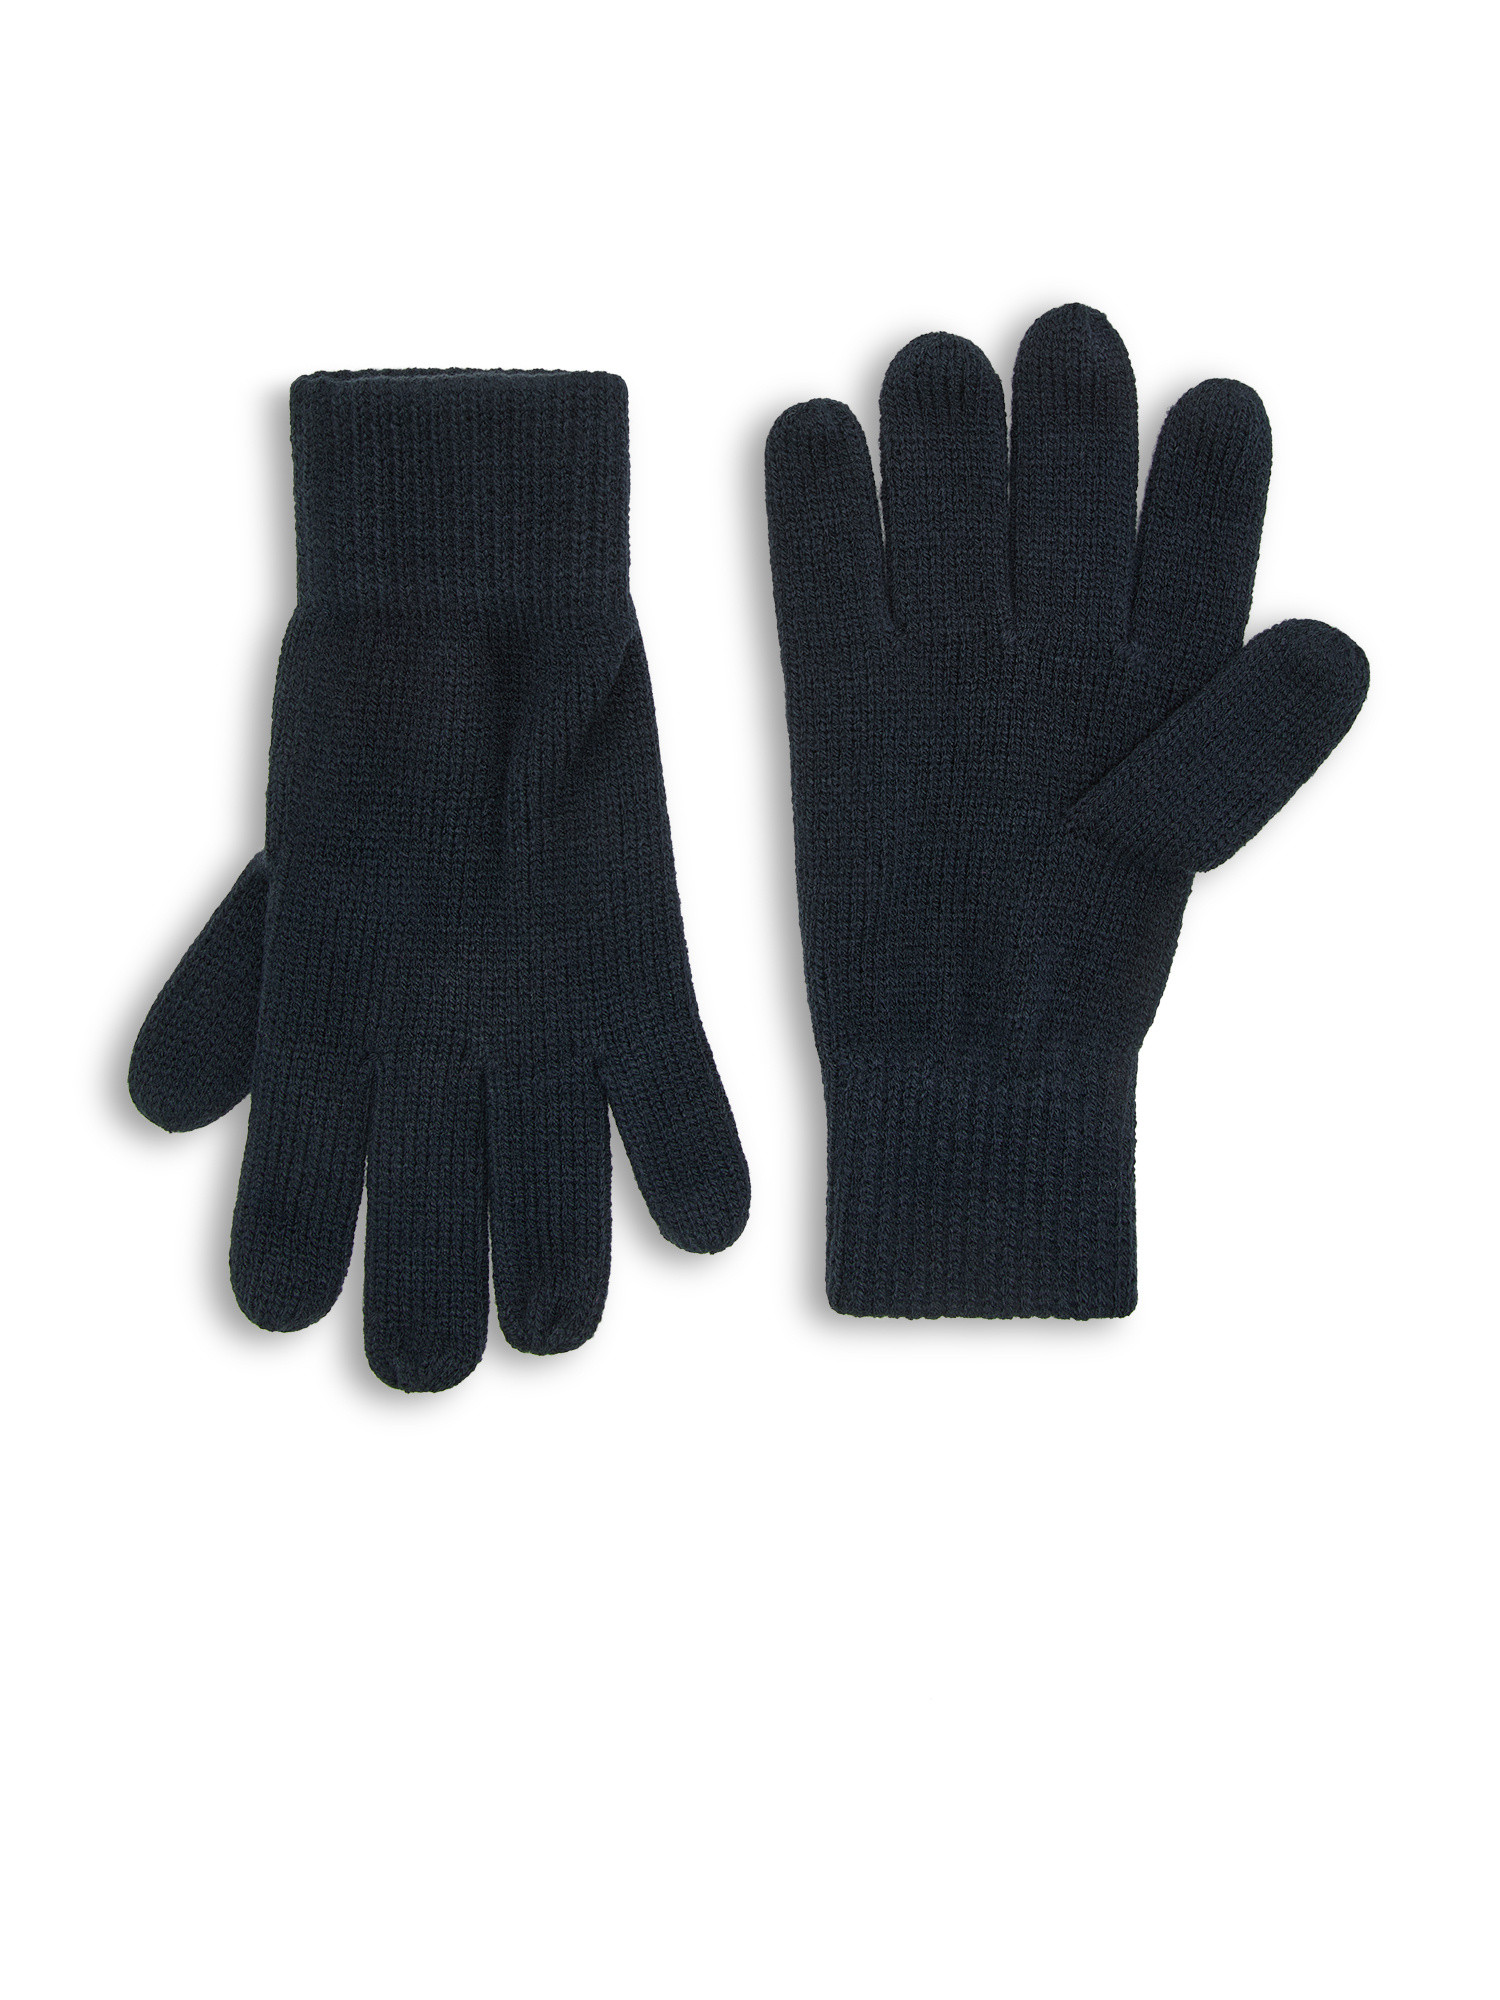 Luca D'Altieri - Basic knitted gloves, Dark Blue, large image number 0